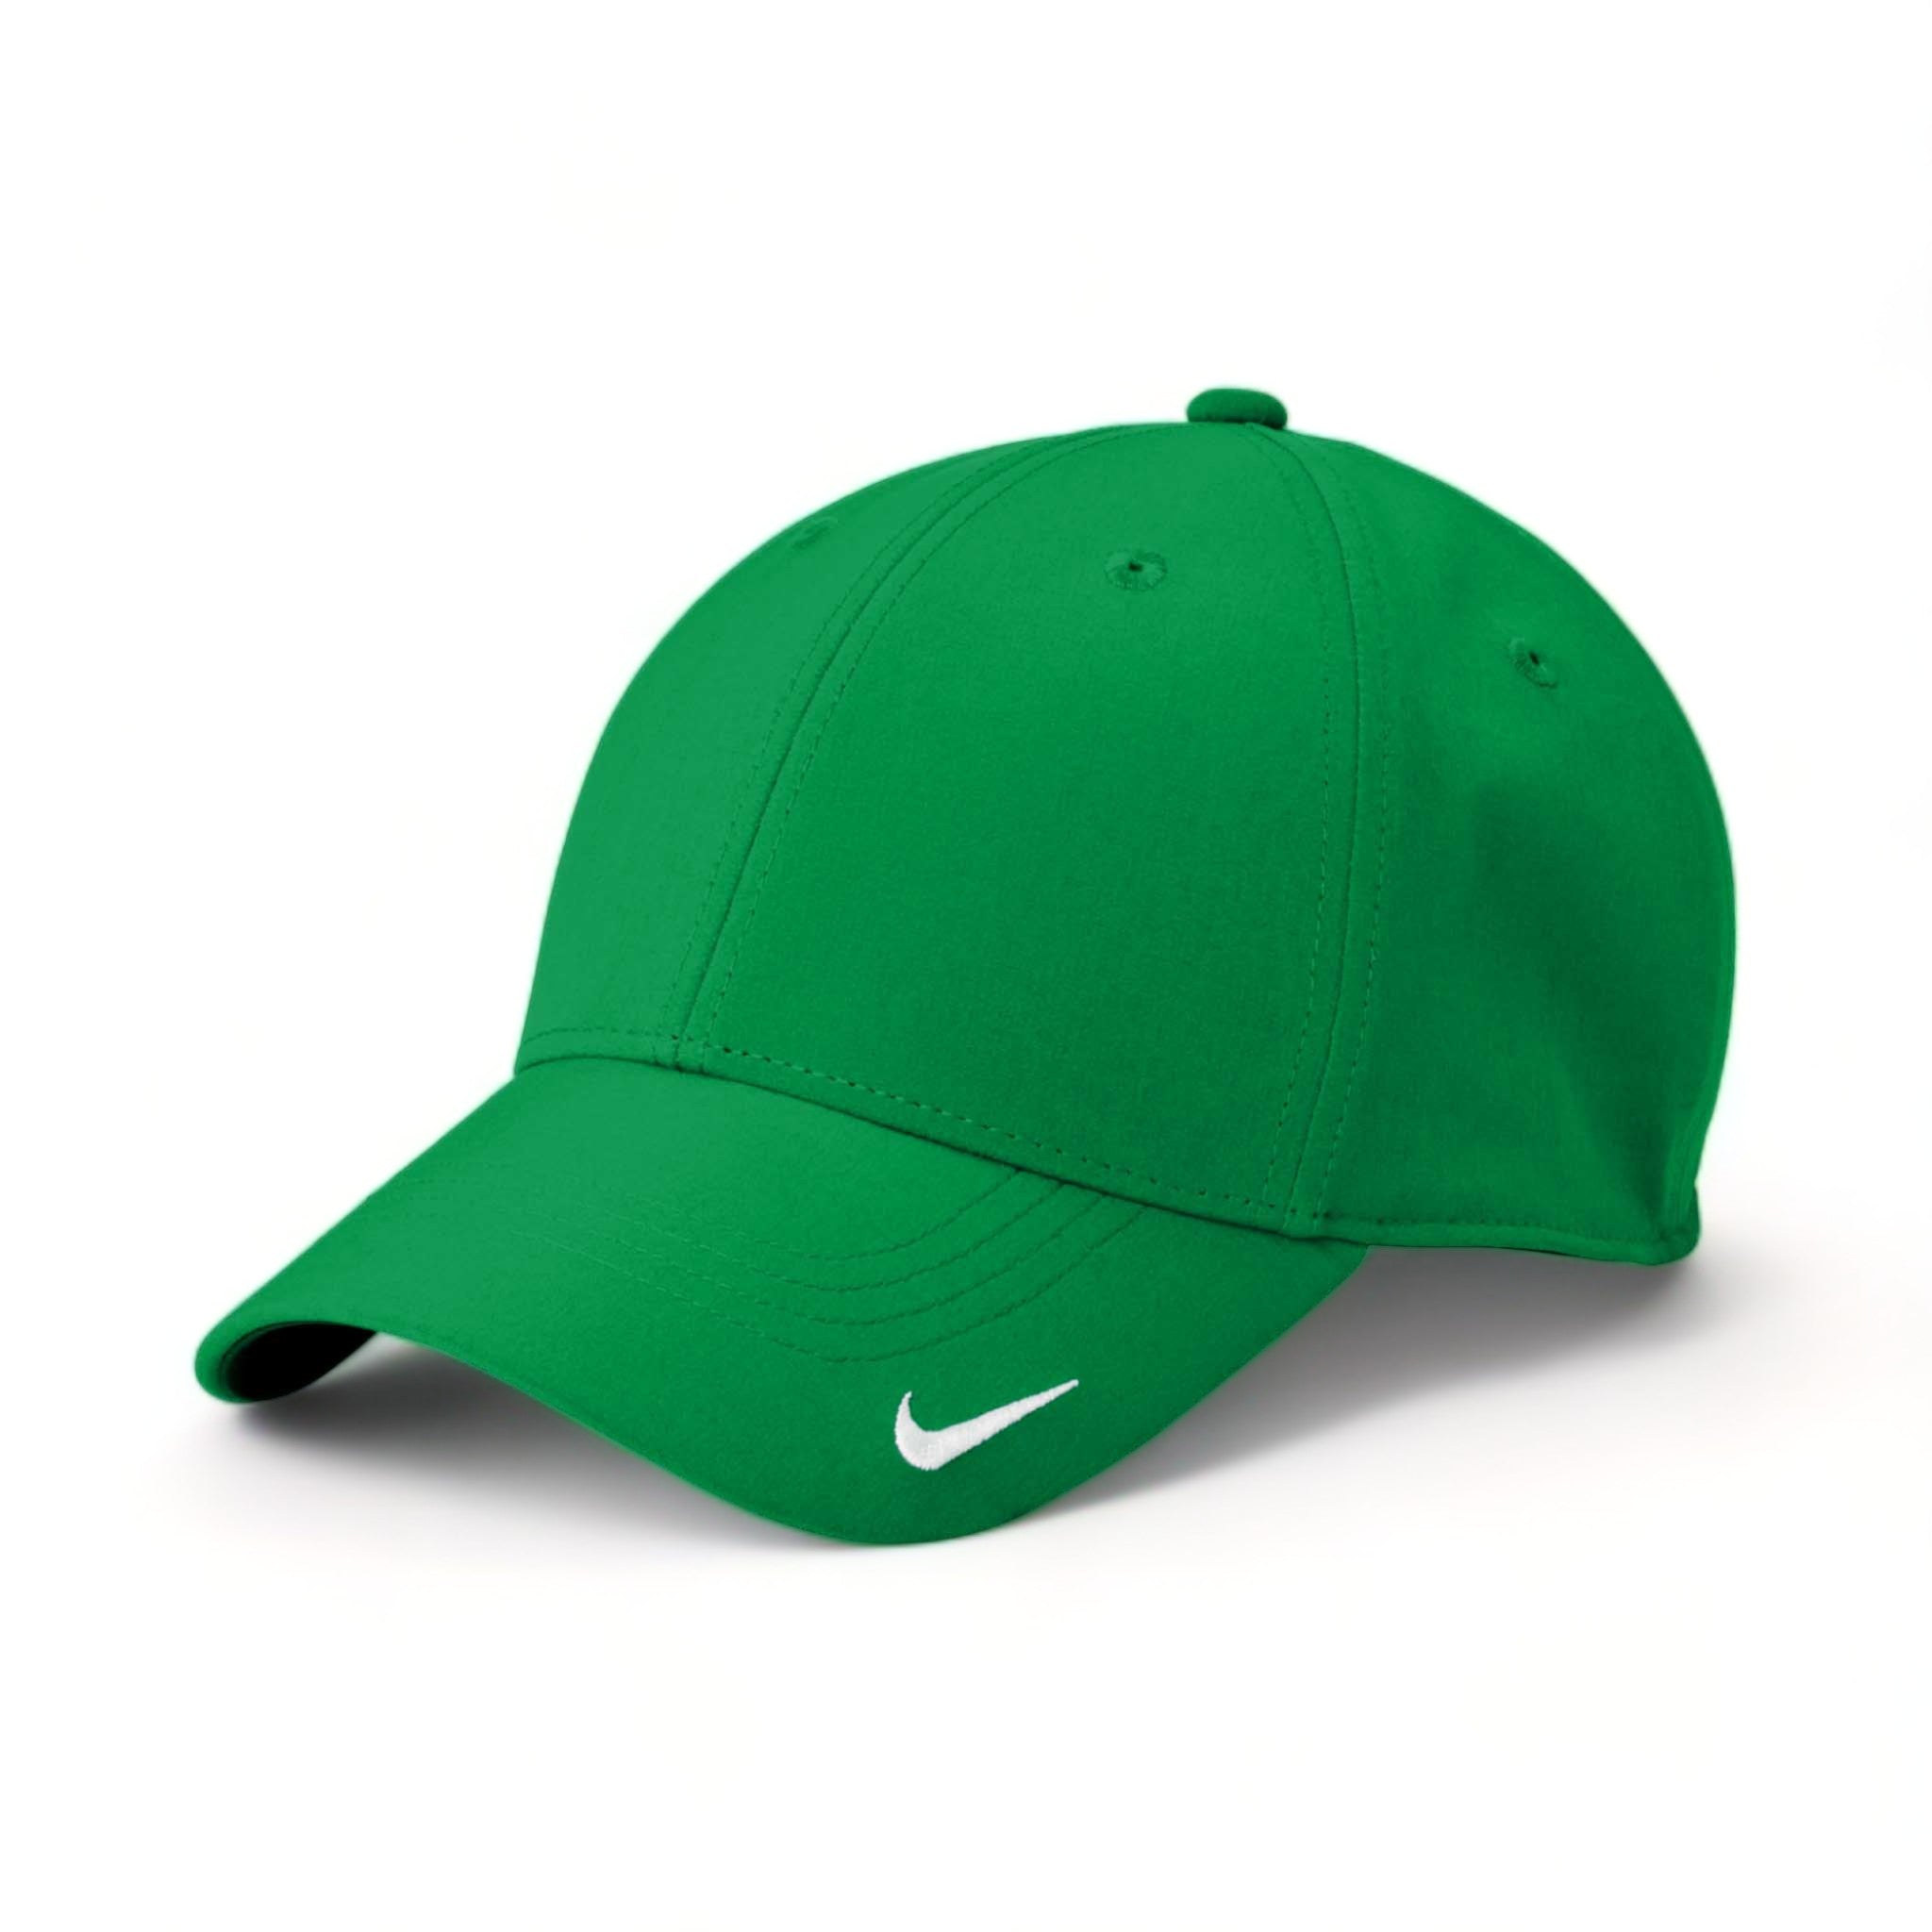 Side view of Nike NKFB6447 custom hat in apple green